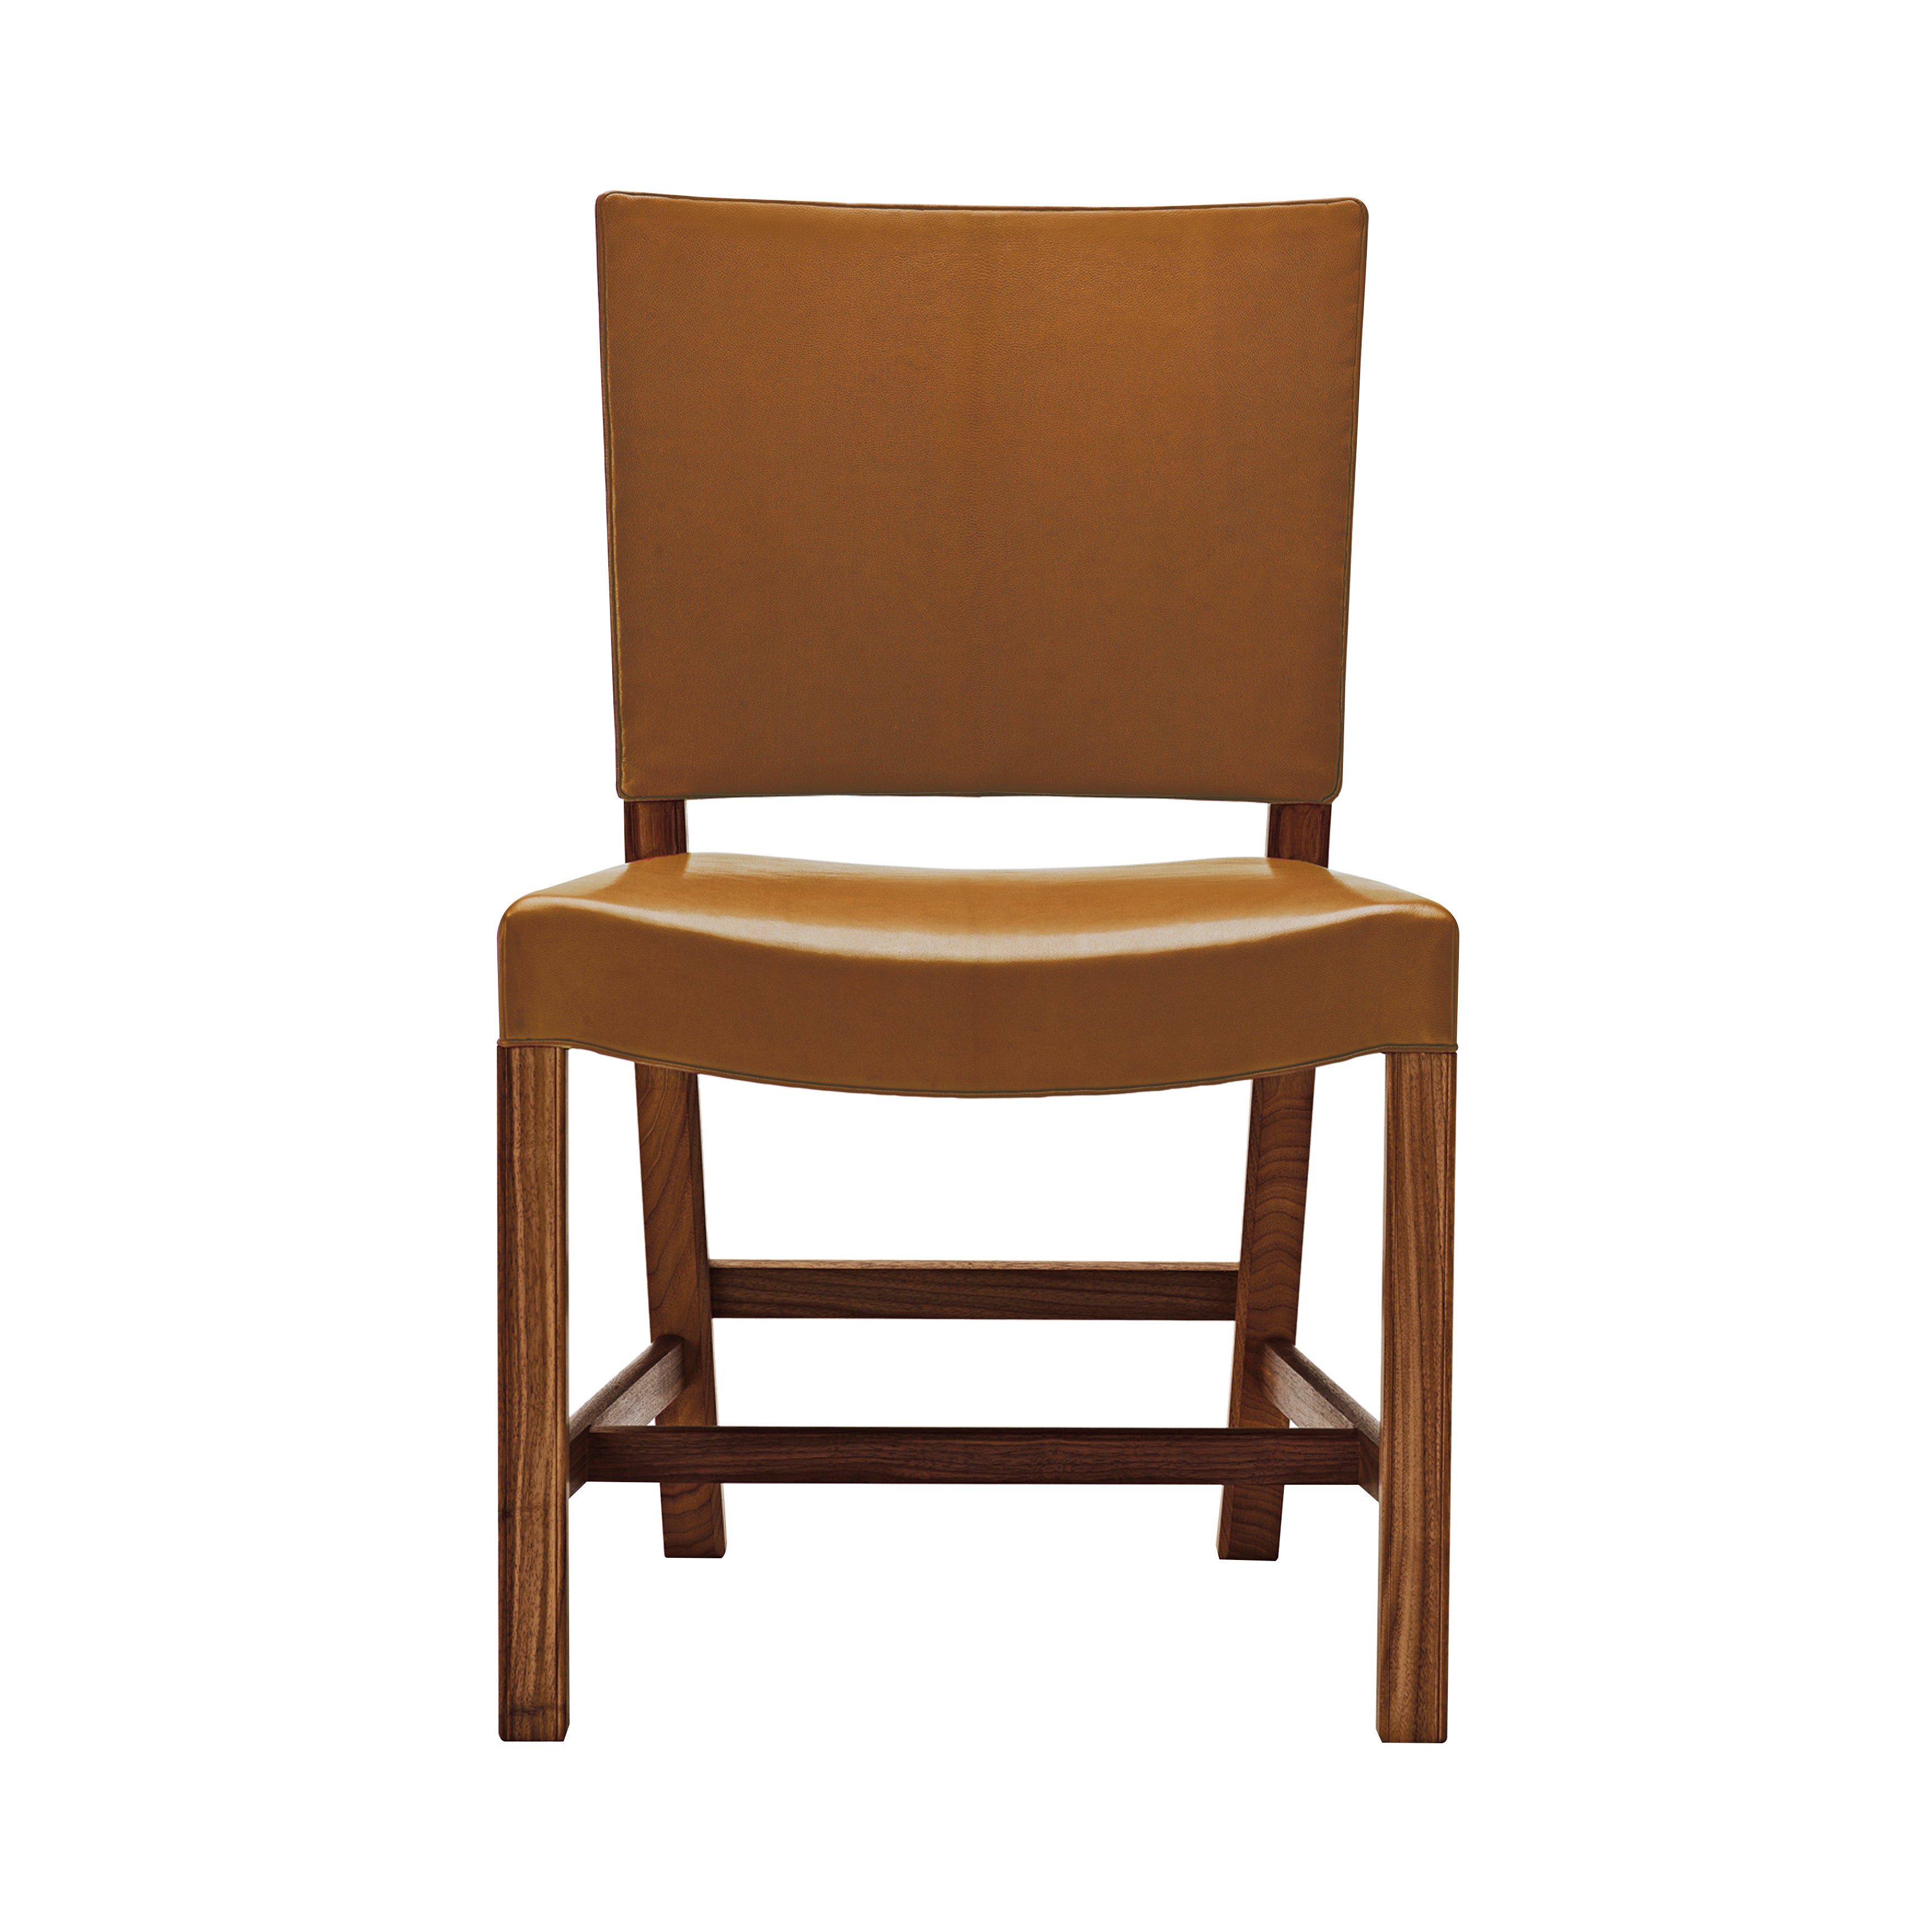 Red Chair: Medium - 20.9